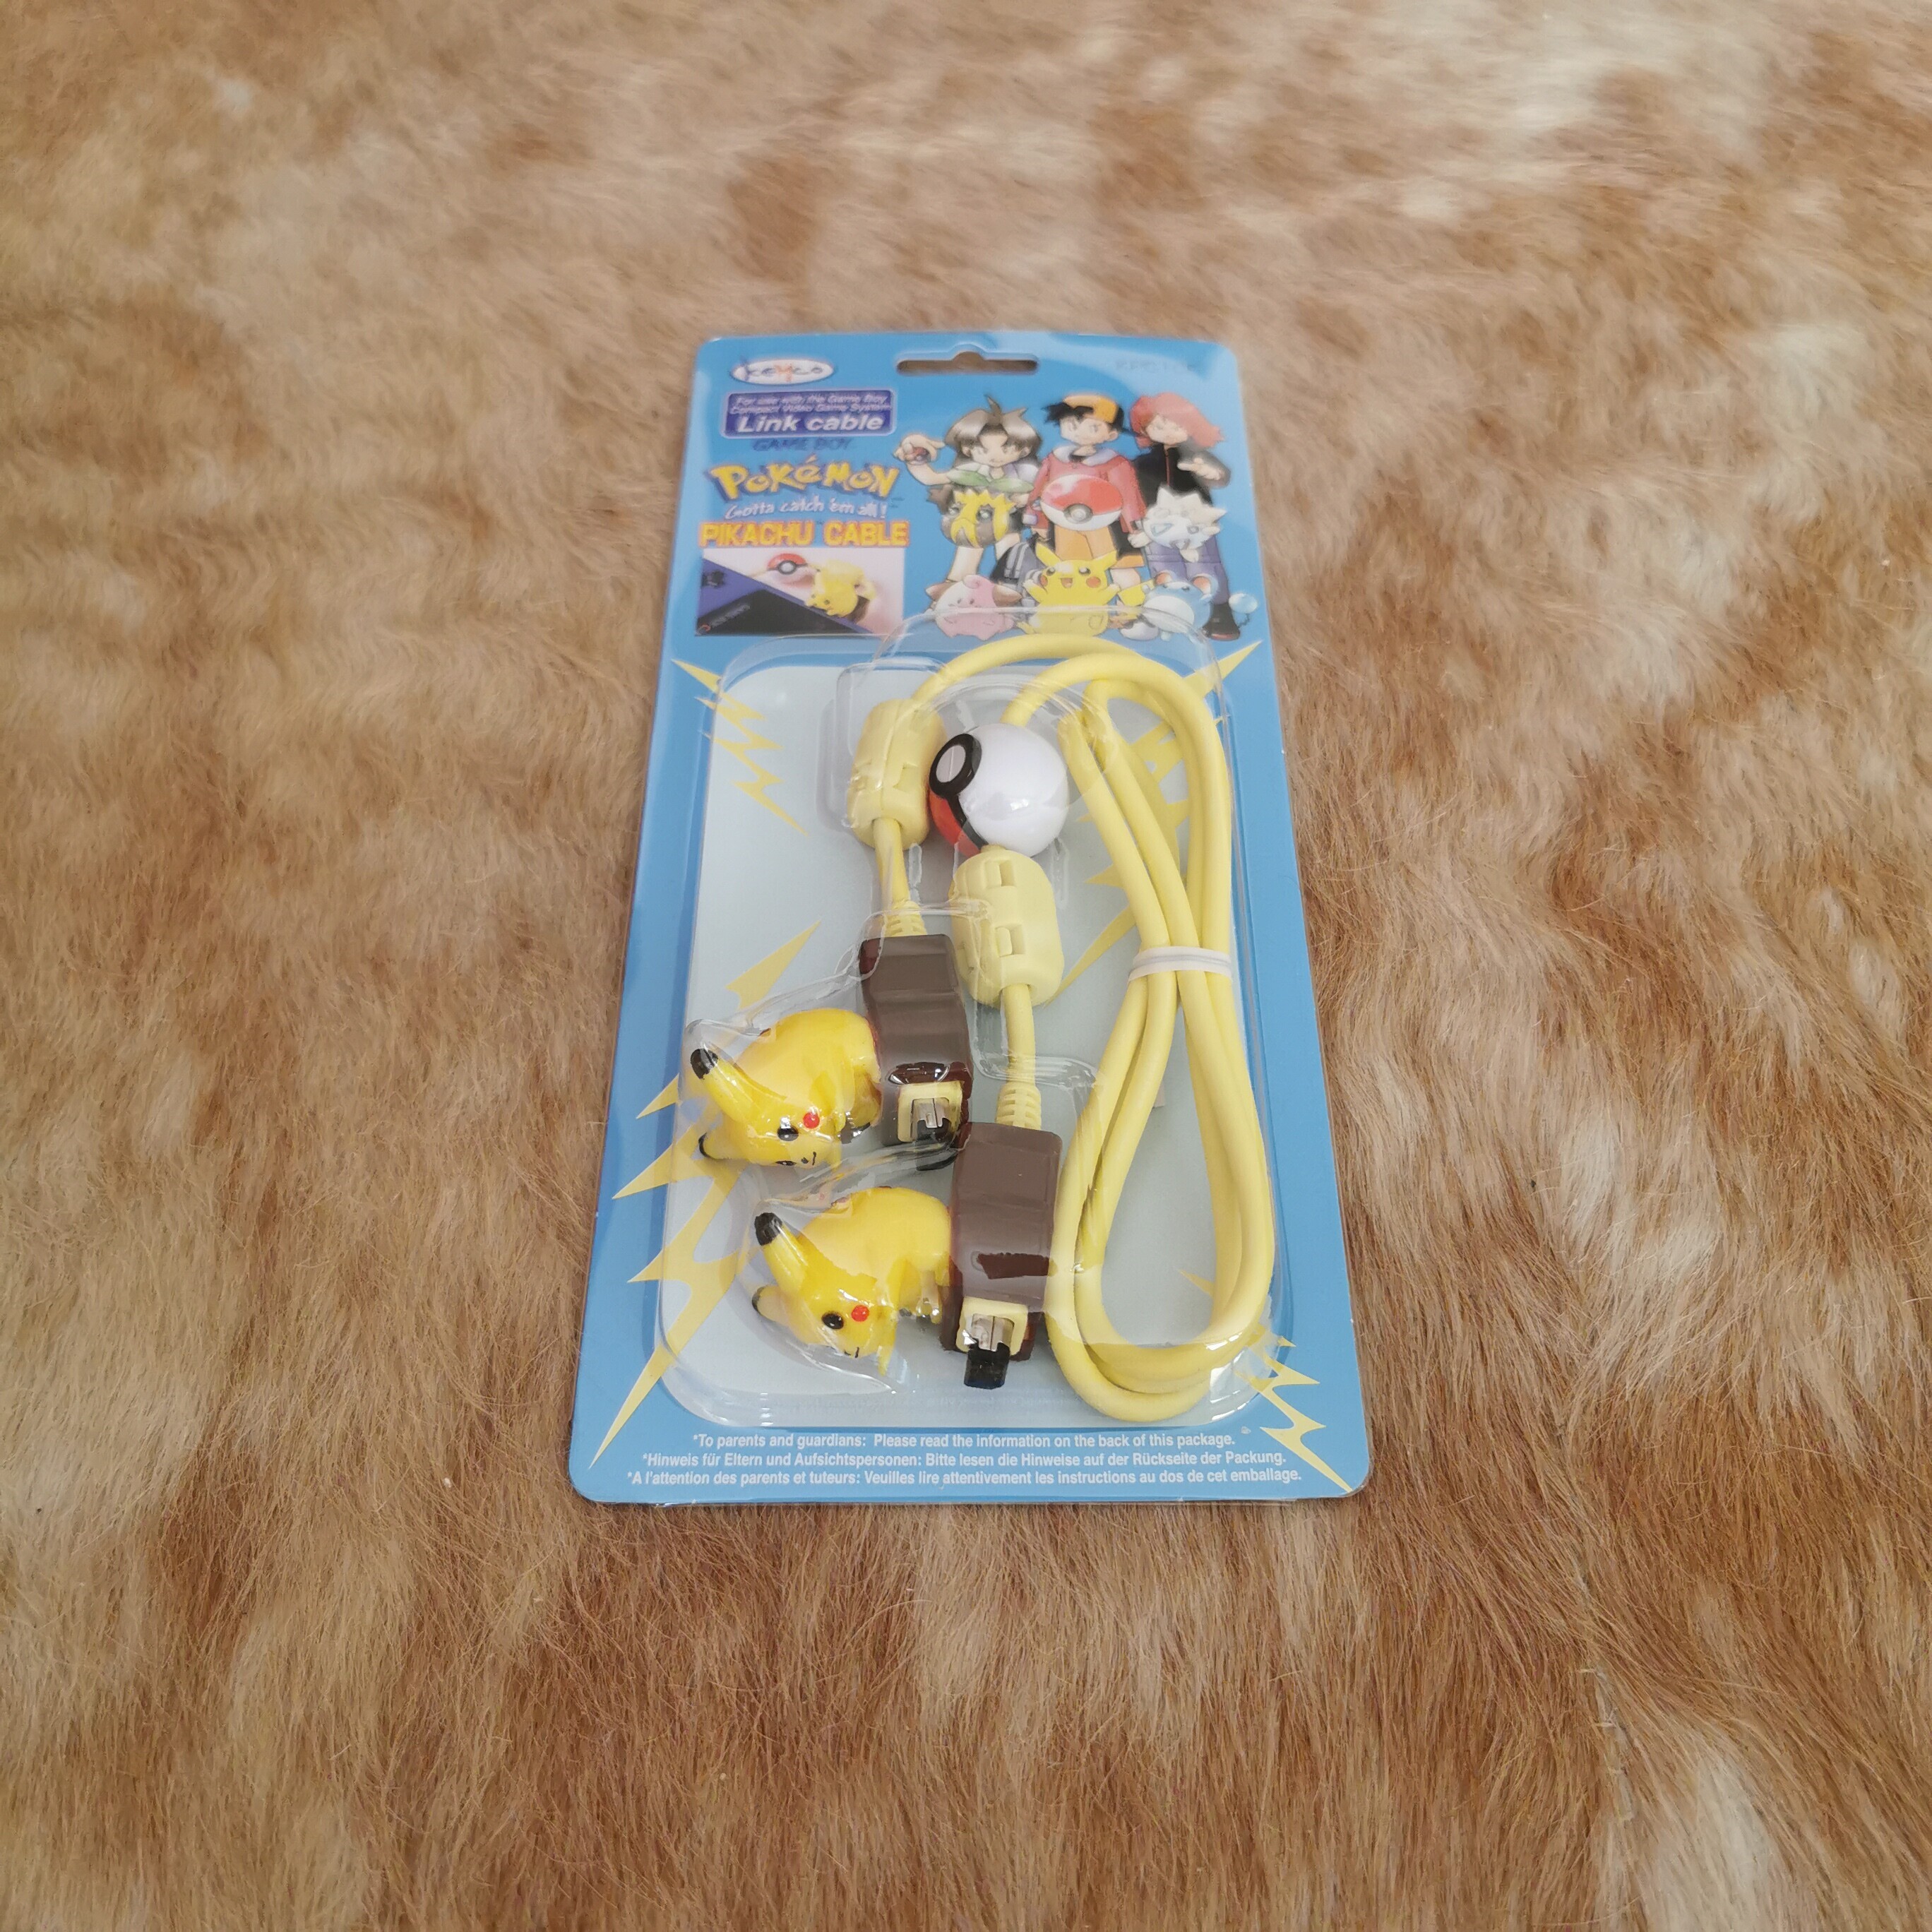  Kemco Game Boy Color Pokémon Pikachu Link Cable